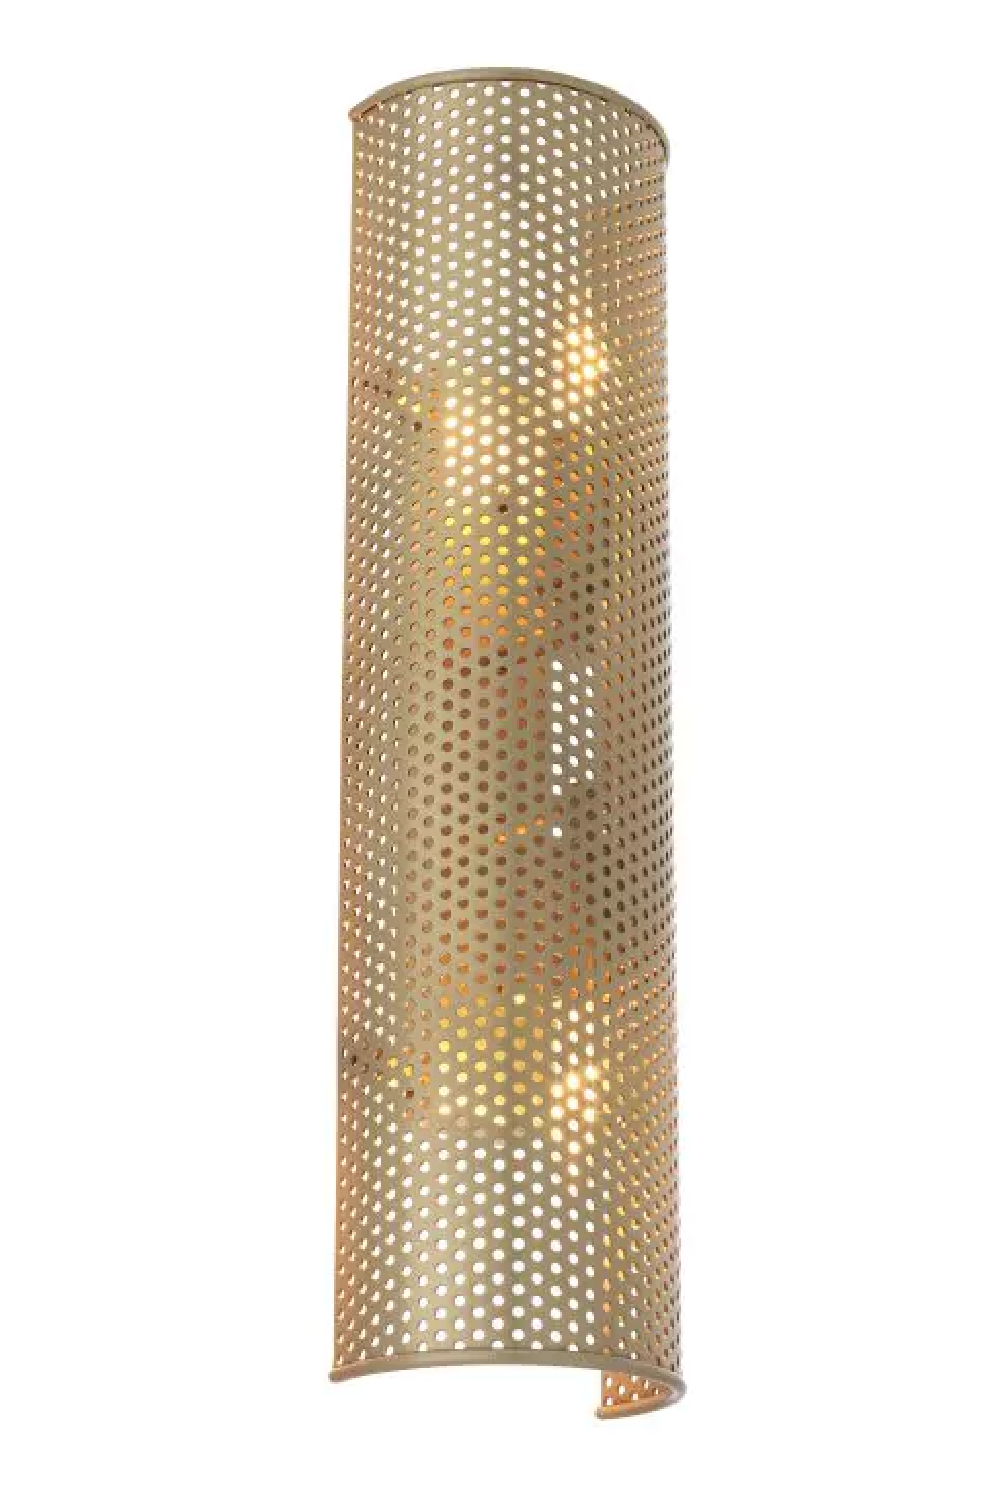 Antique Brass Finish Bold Geometric Wall Lamp L | Eichholtz Morrison | Oroa.com